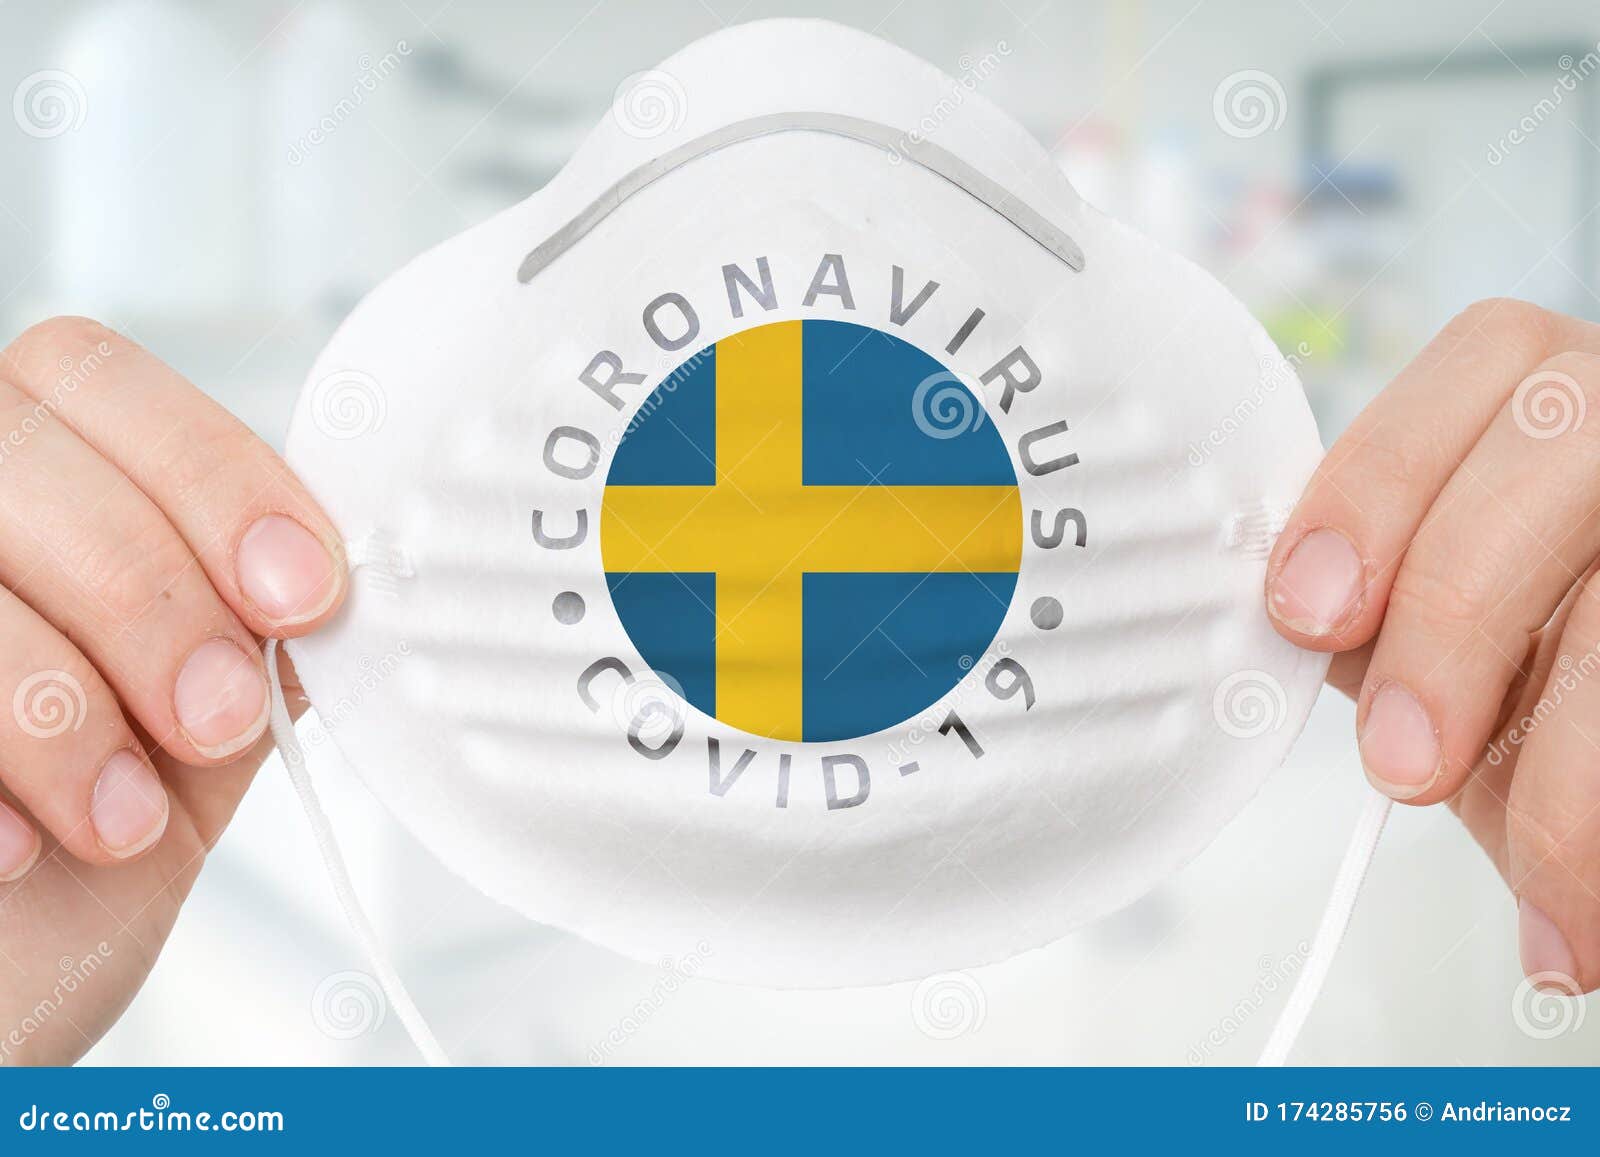 Máscara de respirador con bandera de Suecia - Conce Coronavirus COVID-19. Máscara respiratoria con bandera de Suecia - Concepto epidémico Coronavirus COVID-19